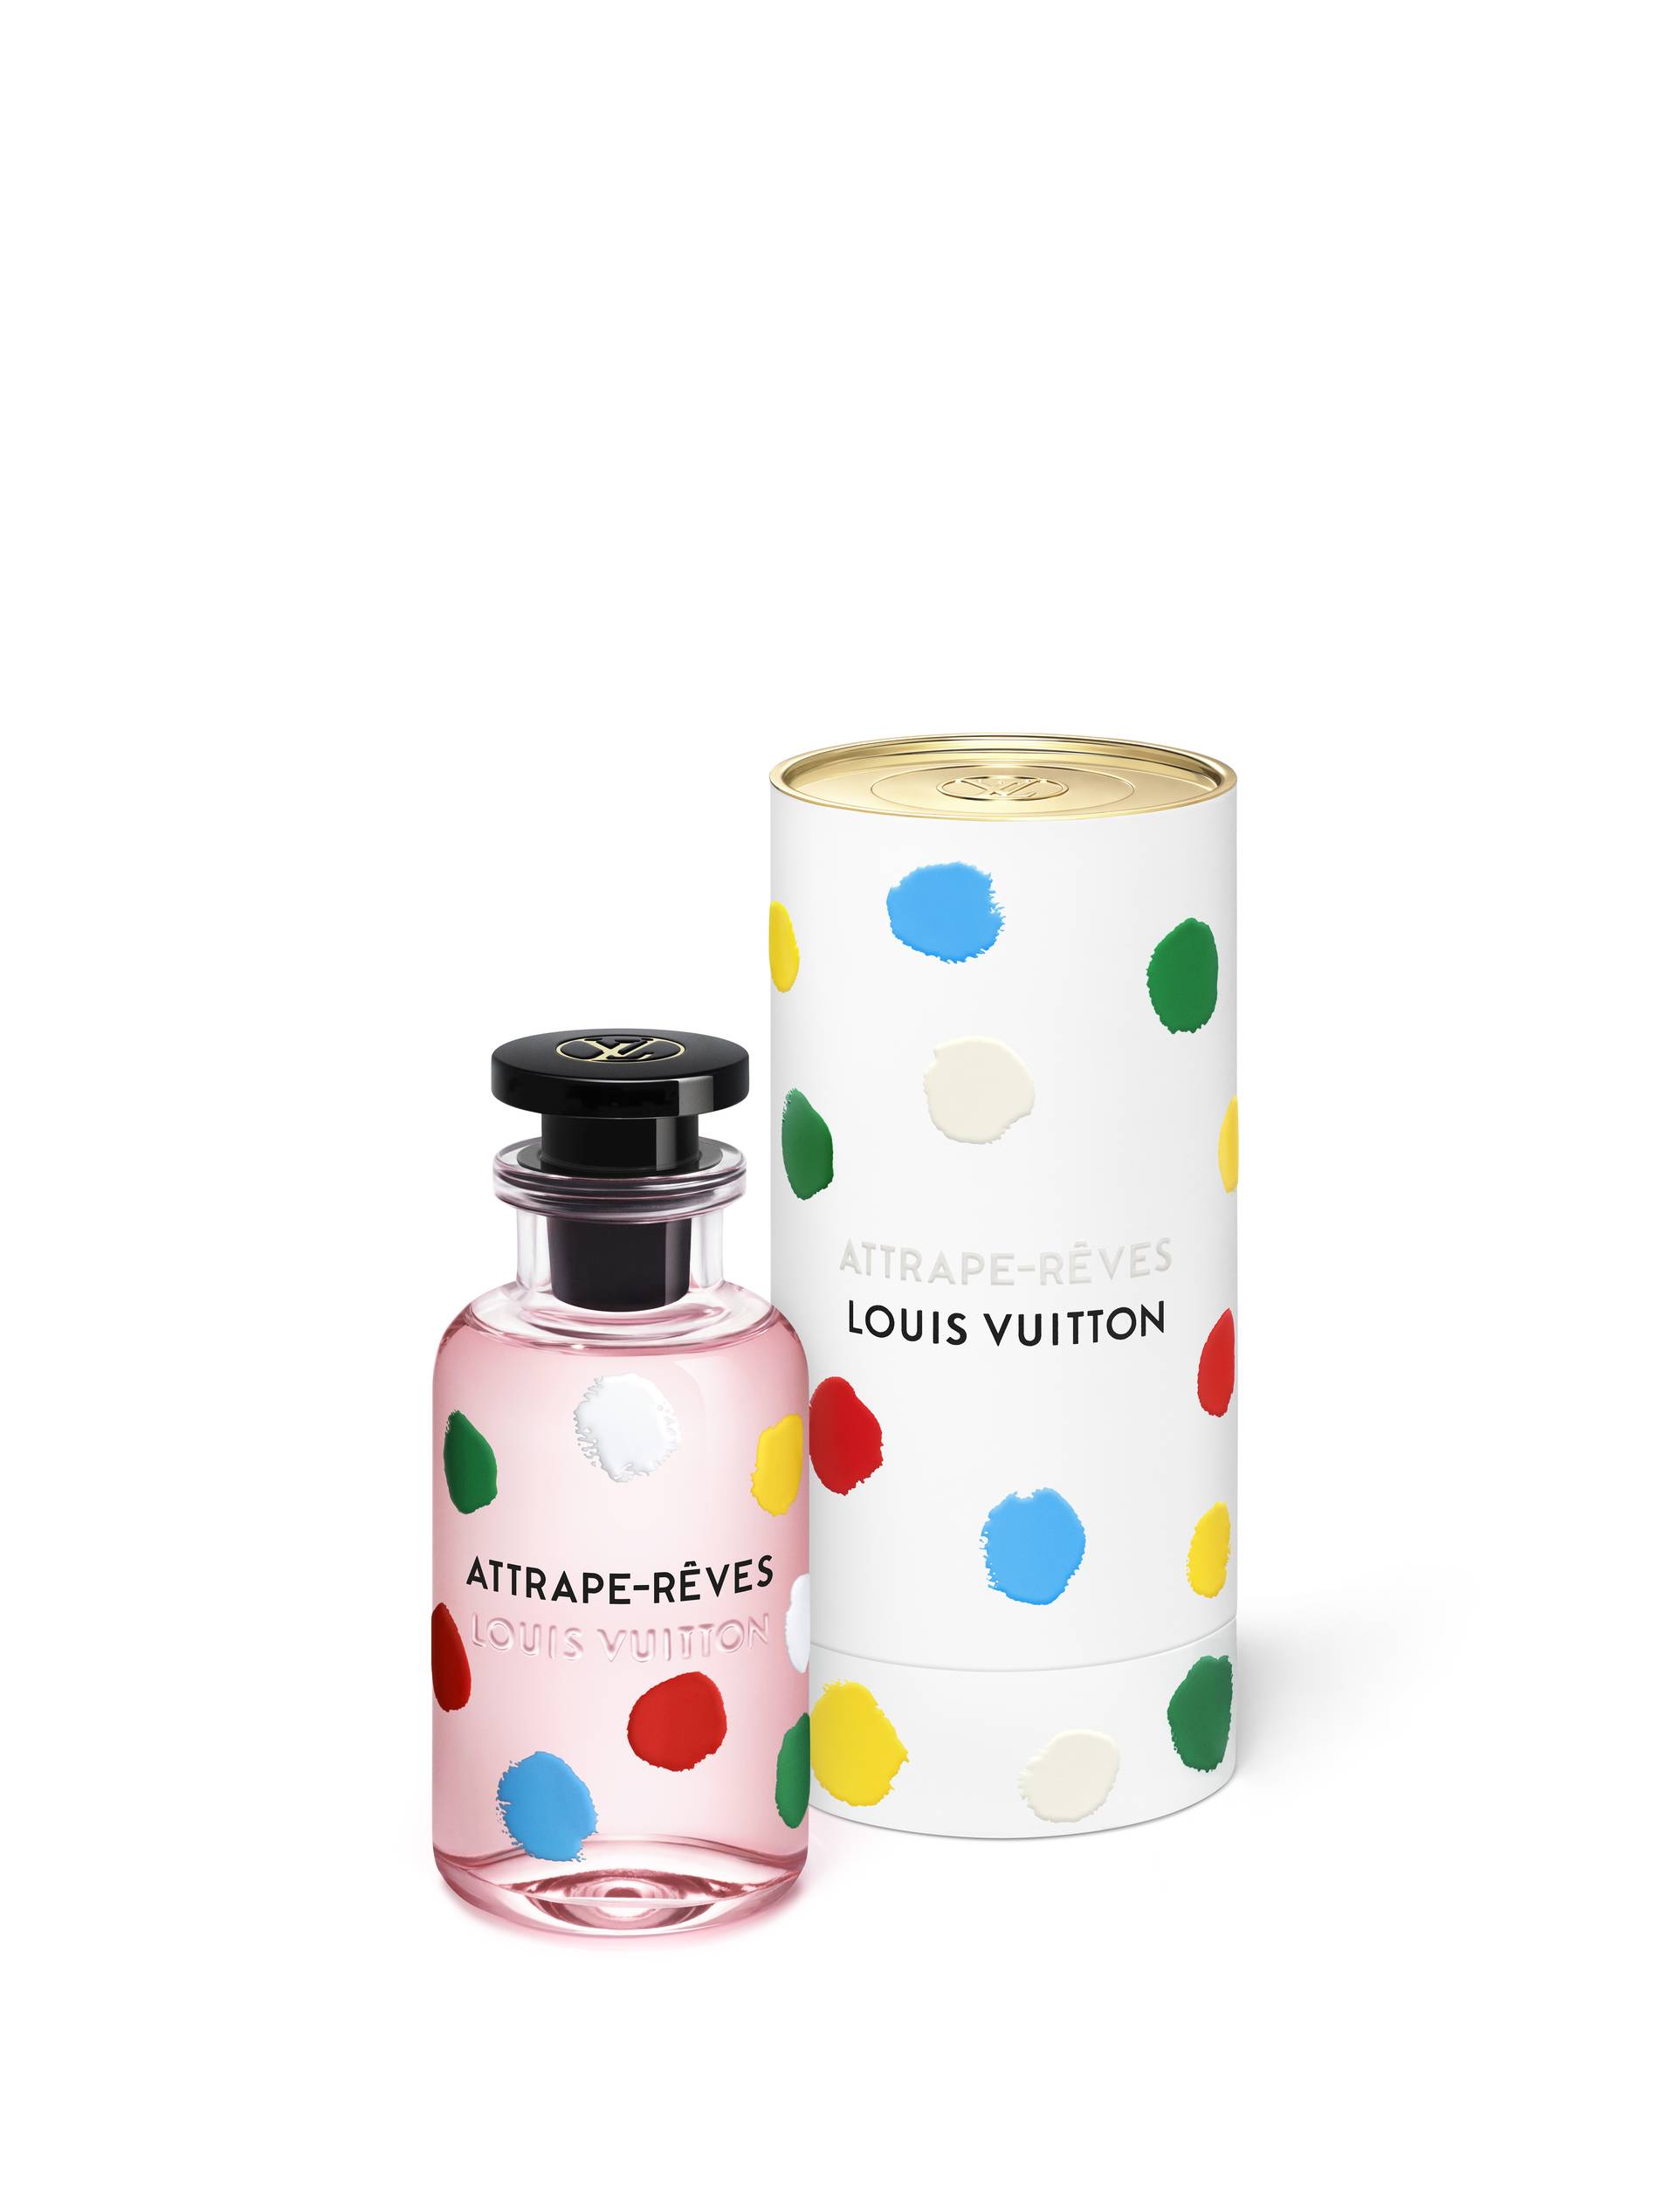 attrape-reves Louis Vuitton fragrance bottle designed by Yayoi Kusama